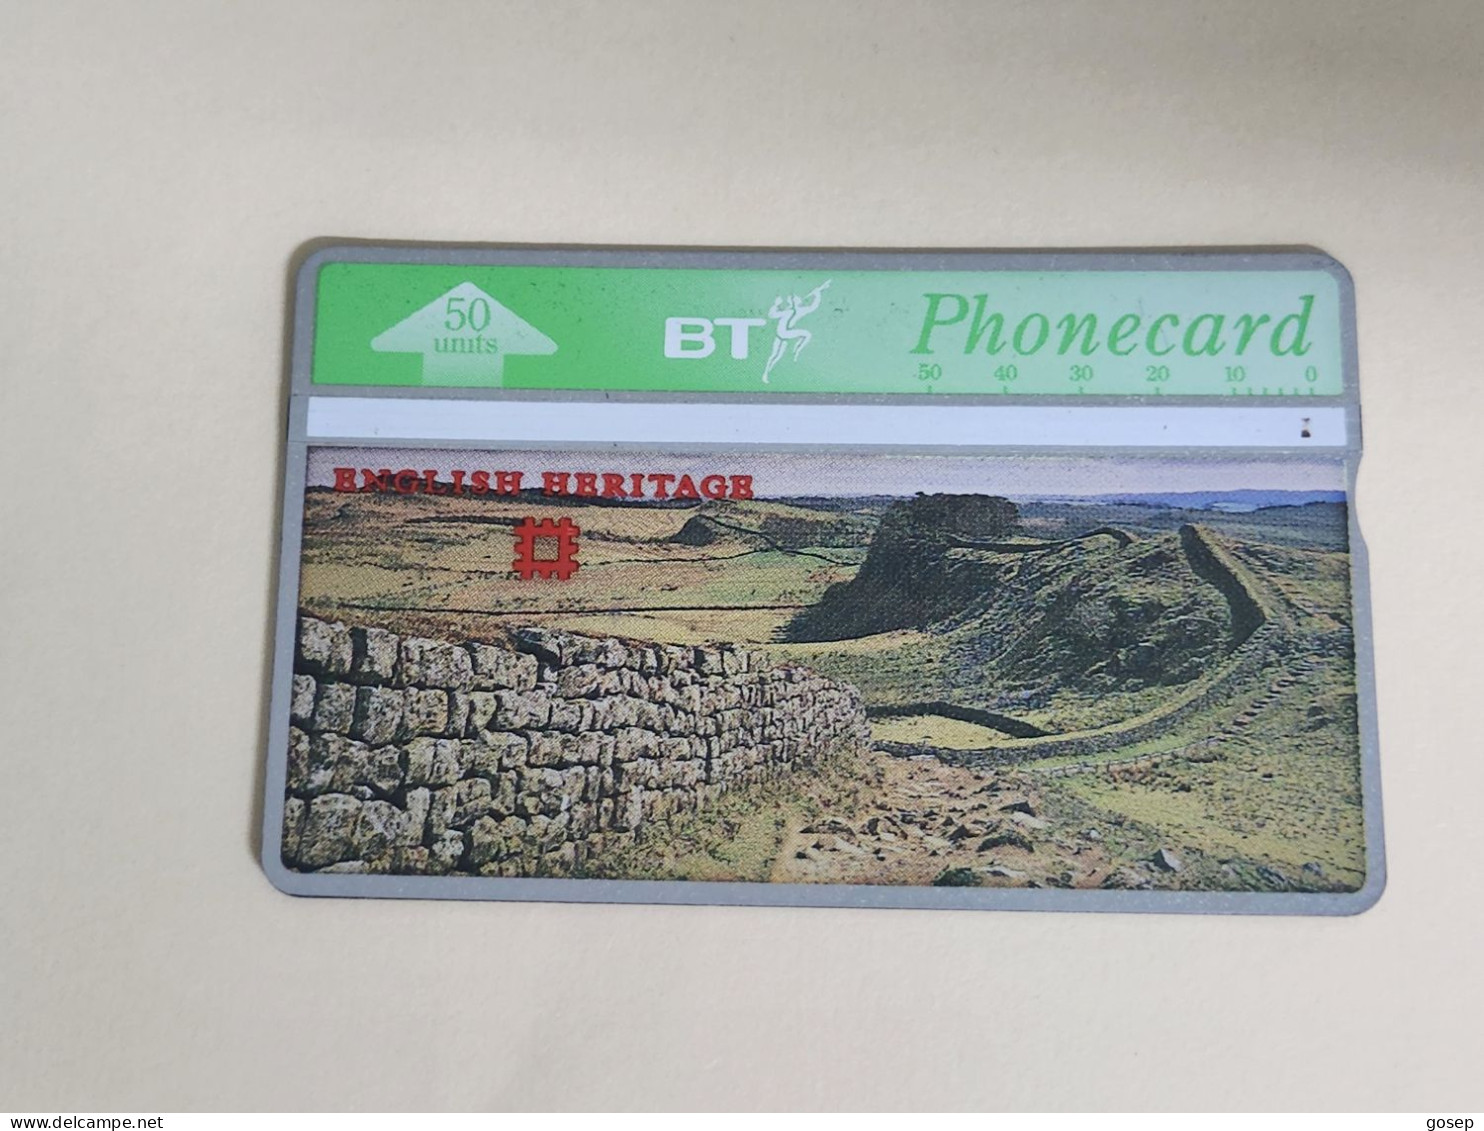 United Kingdom-(BTA107)-HERITAGE-Hadrian's Wall-(181)(50units)(528E62834)price Cataloge3.00£-used+1card Prepiad Free - BT Publicitaire Uitgaven